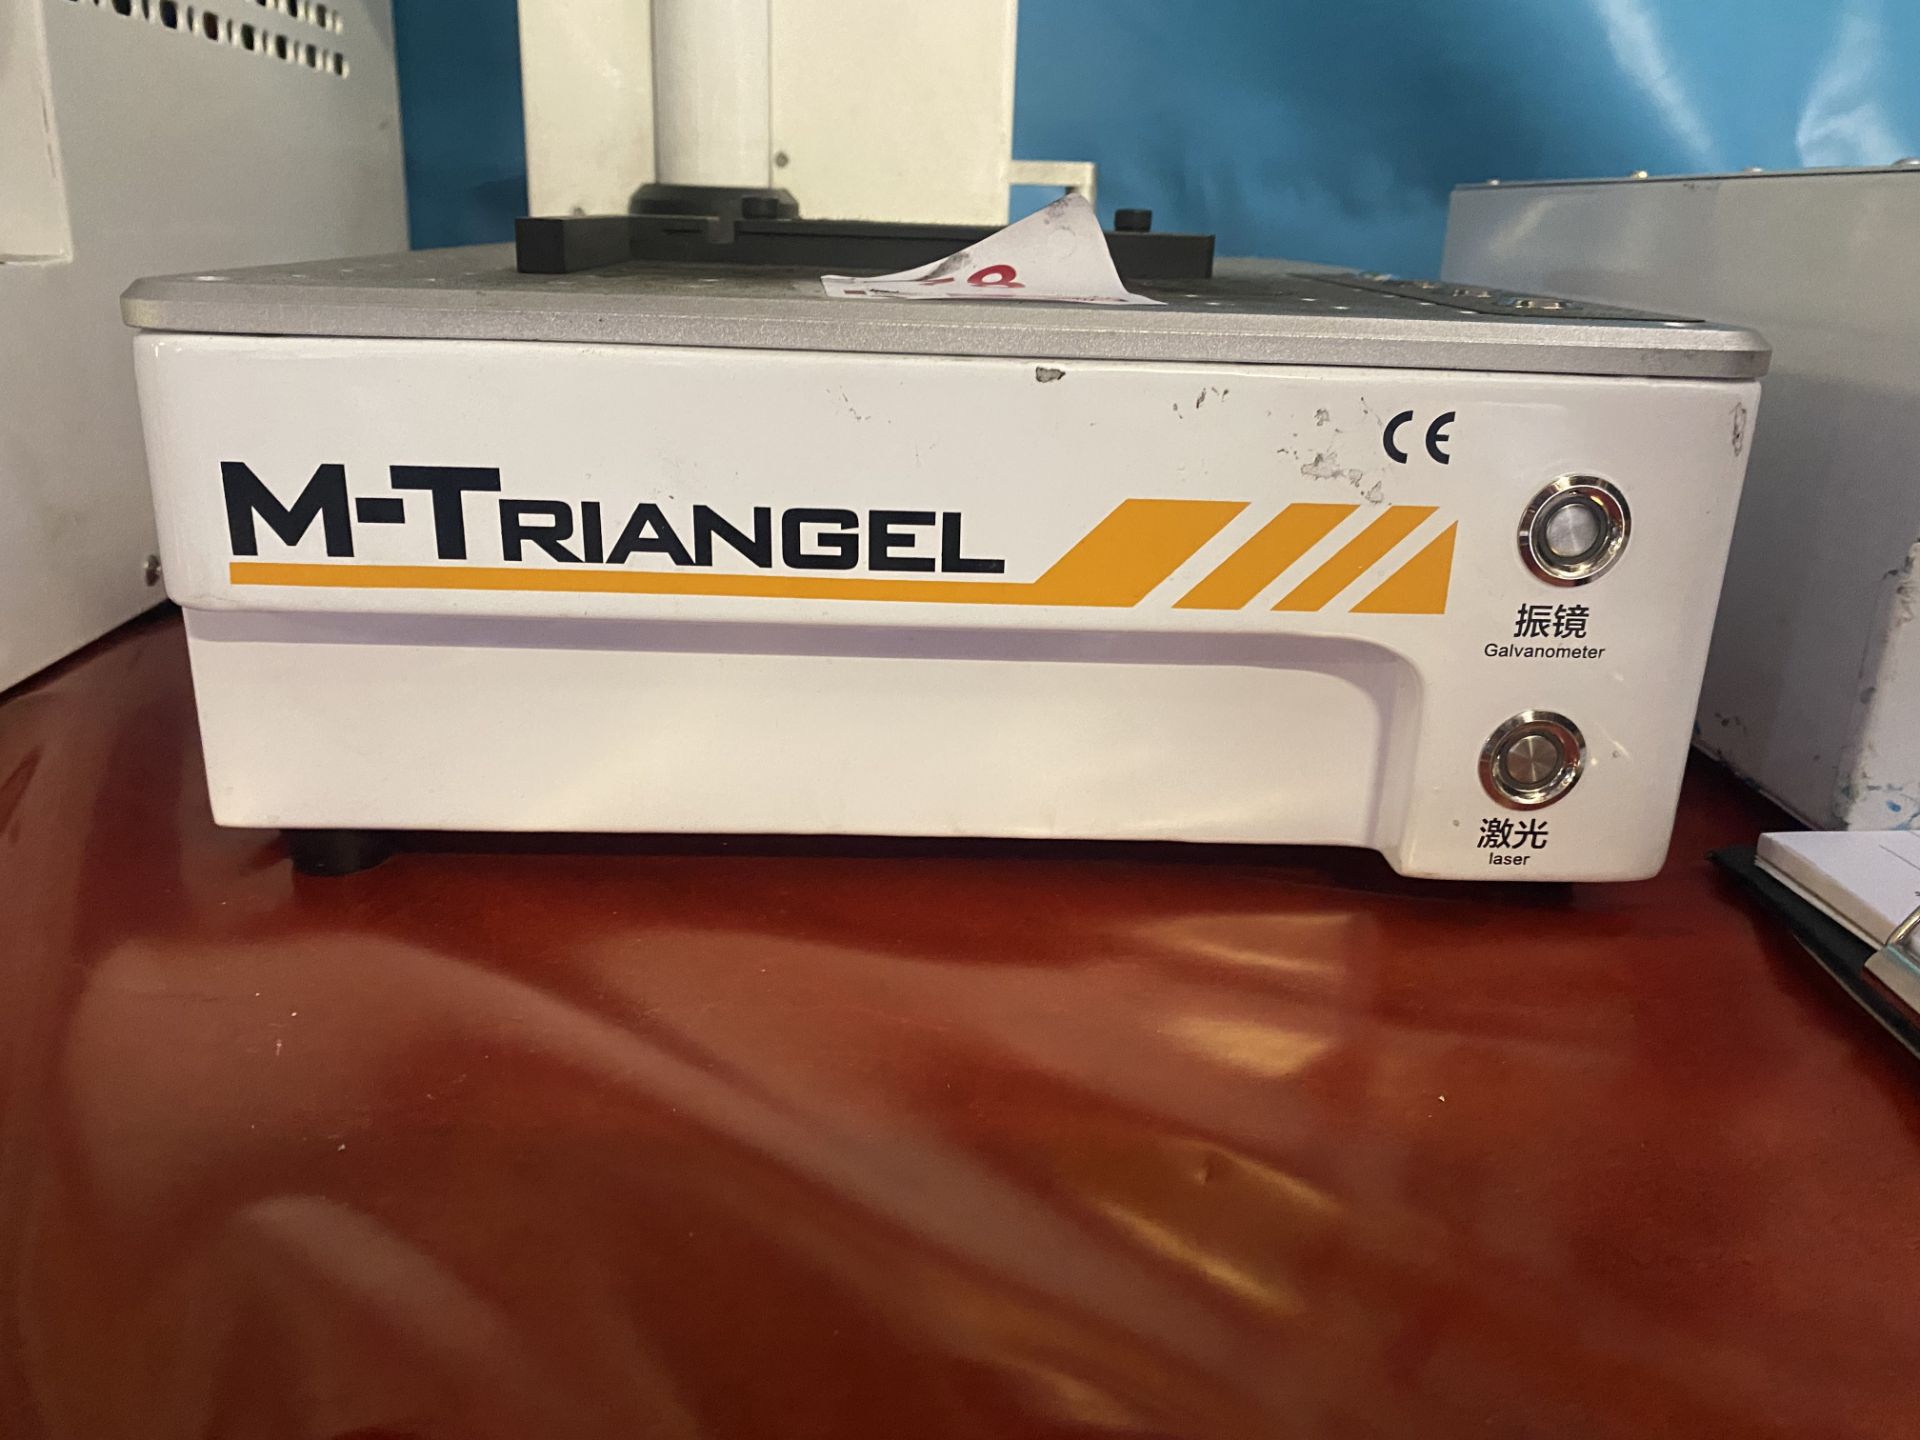 M-Triangel laser galvanometer glass cutter - Image 4 of 8